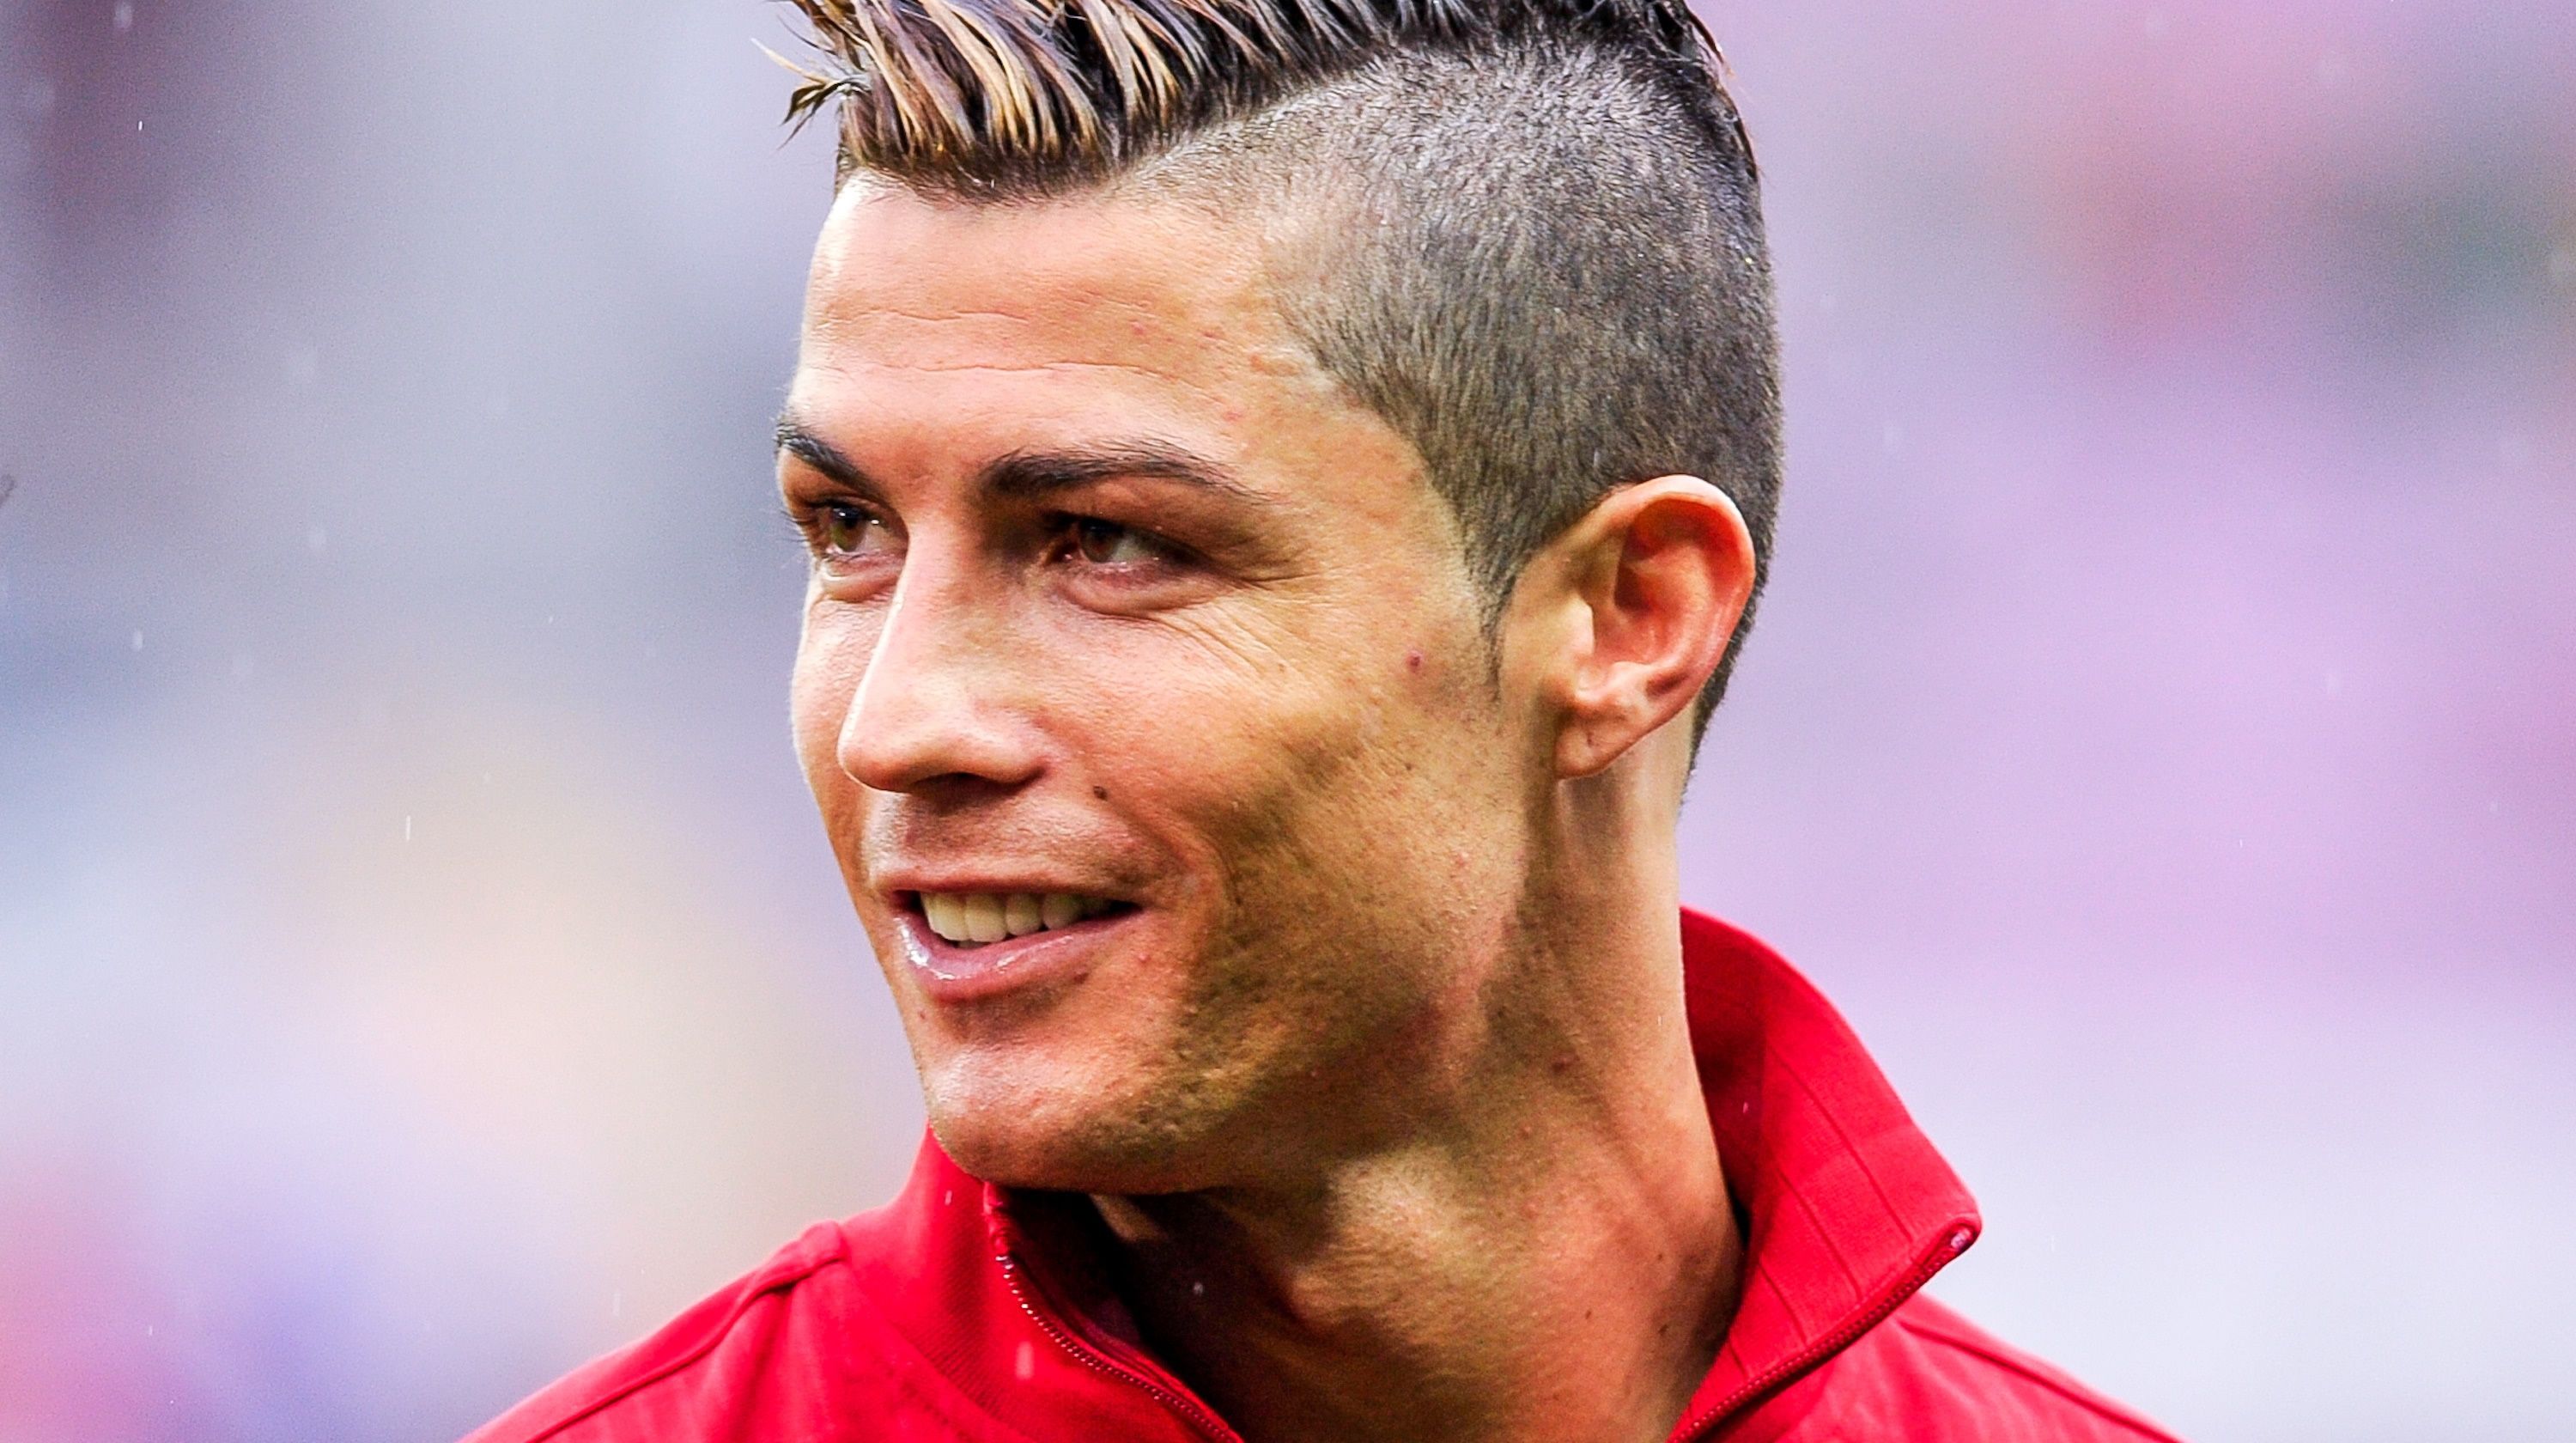 Cristiano Ronaldo 2014 haircut wallpaper - Cristiano Ronaldo